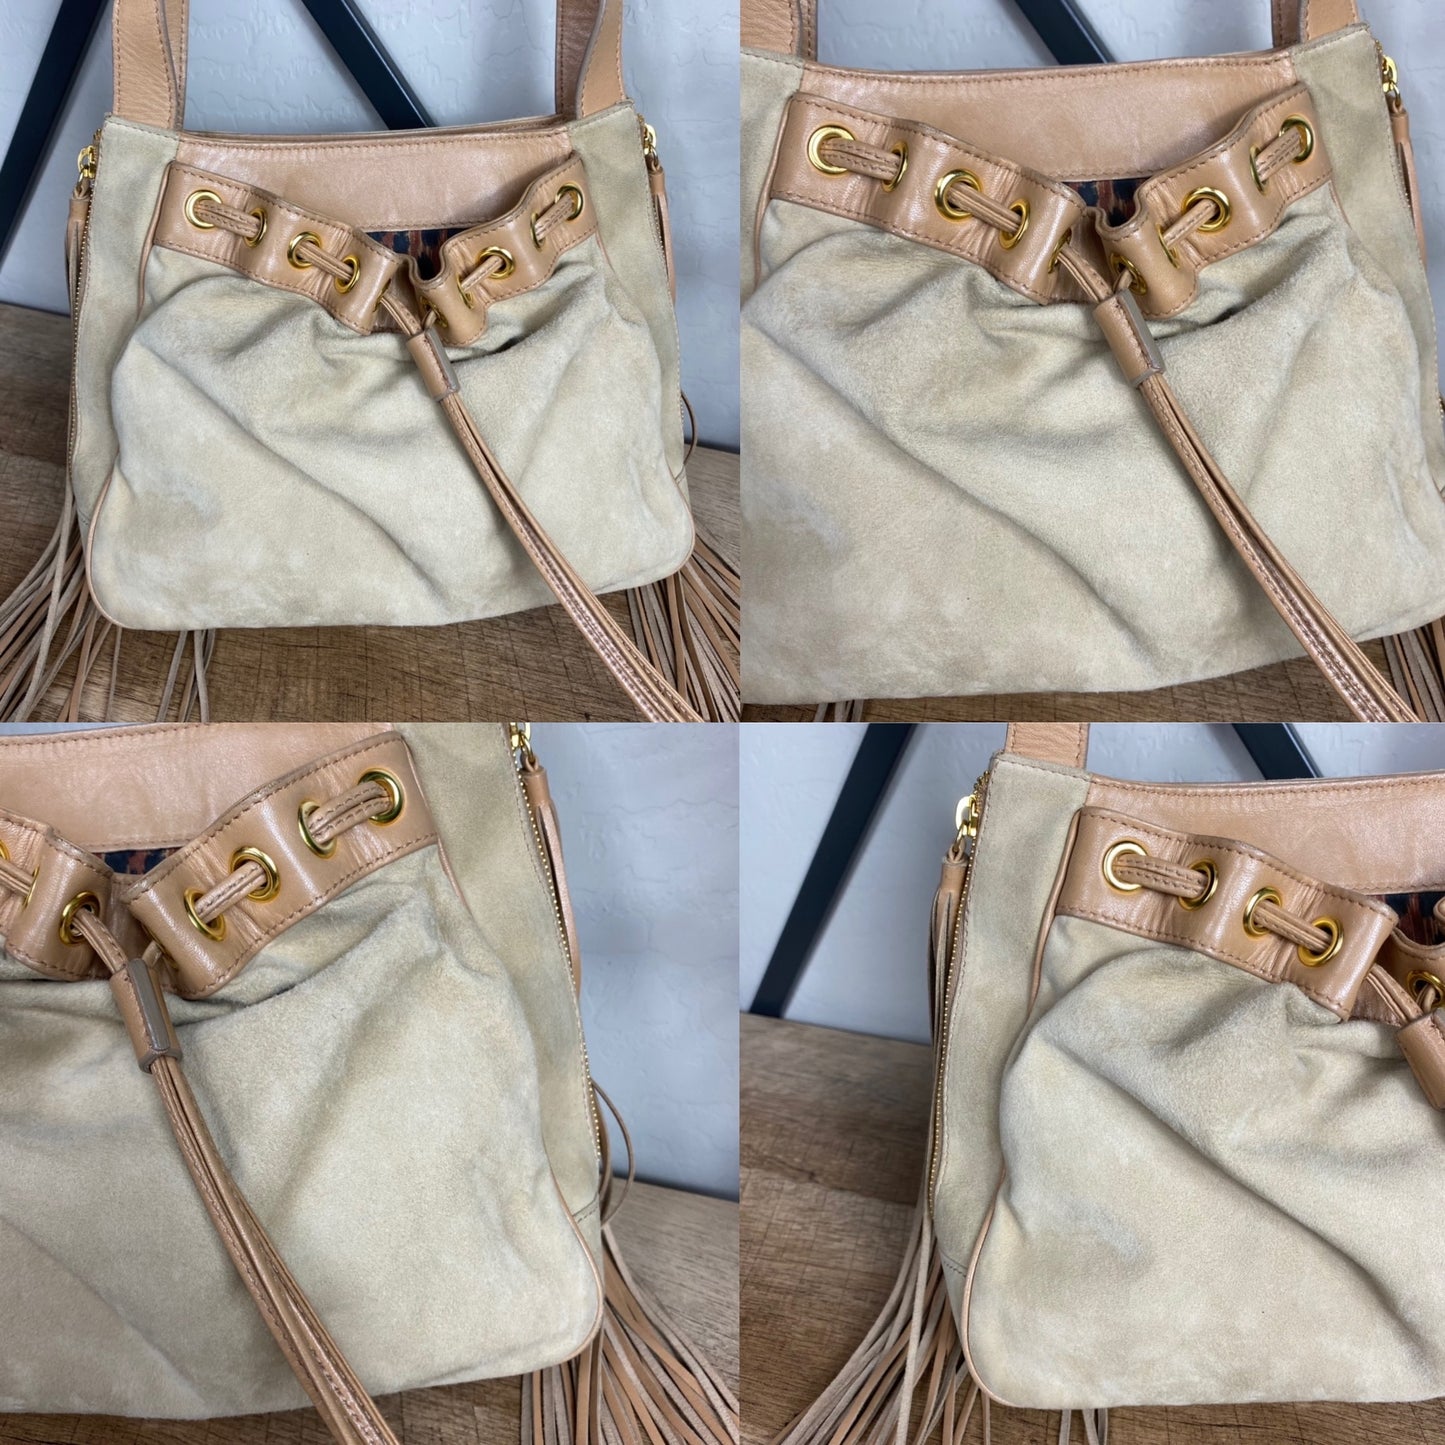 Dolce & Gabbana Suede Drawstring Tassel Bag